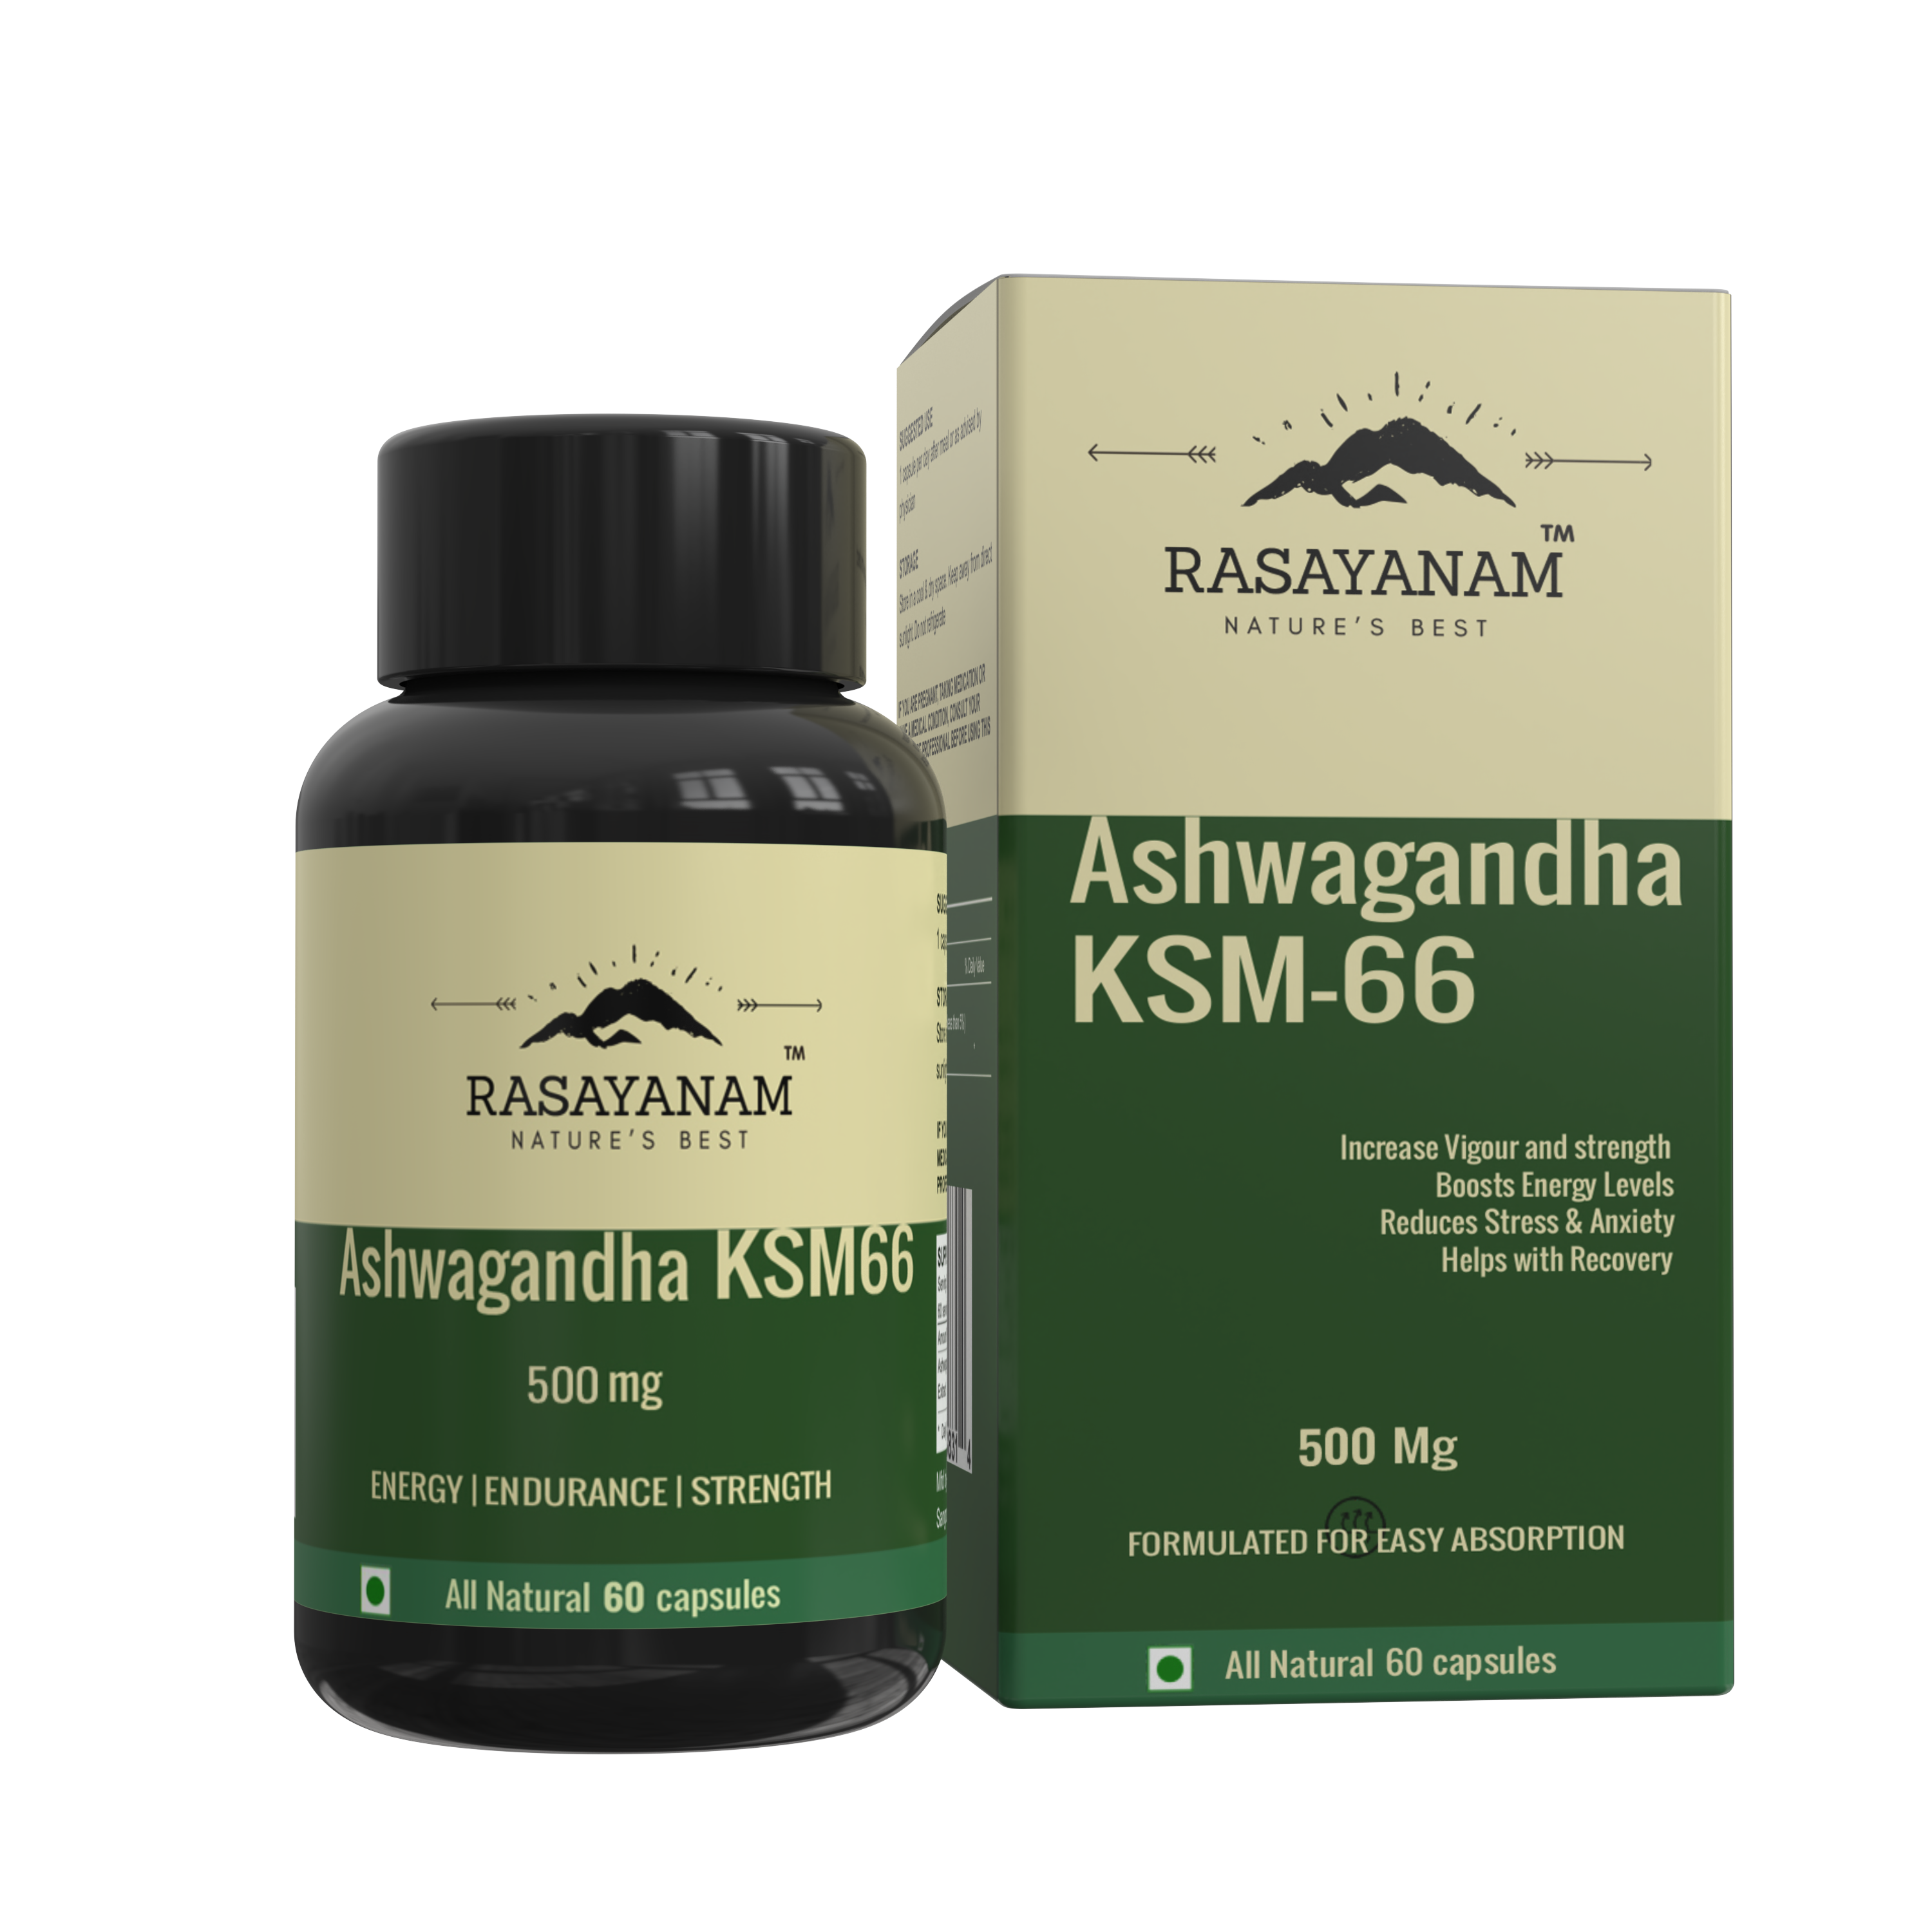 Rasayanam Ashwagandha KSM-66 (500 mg)